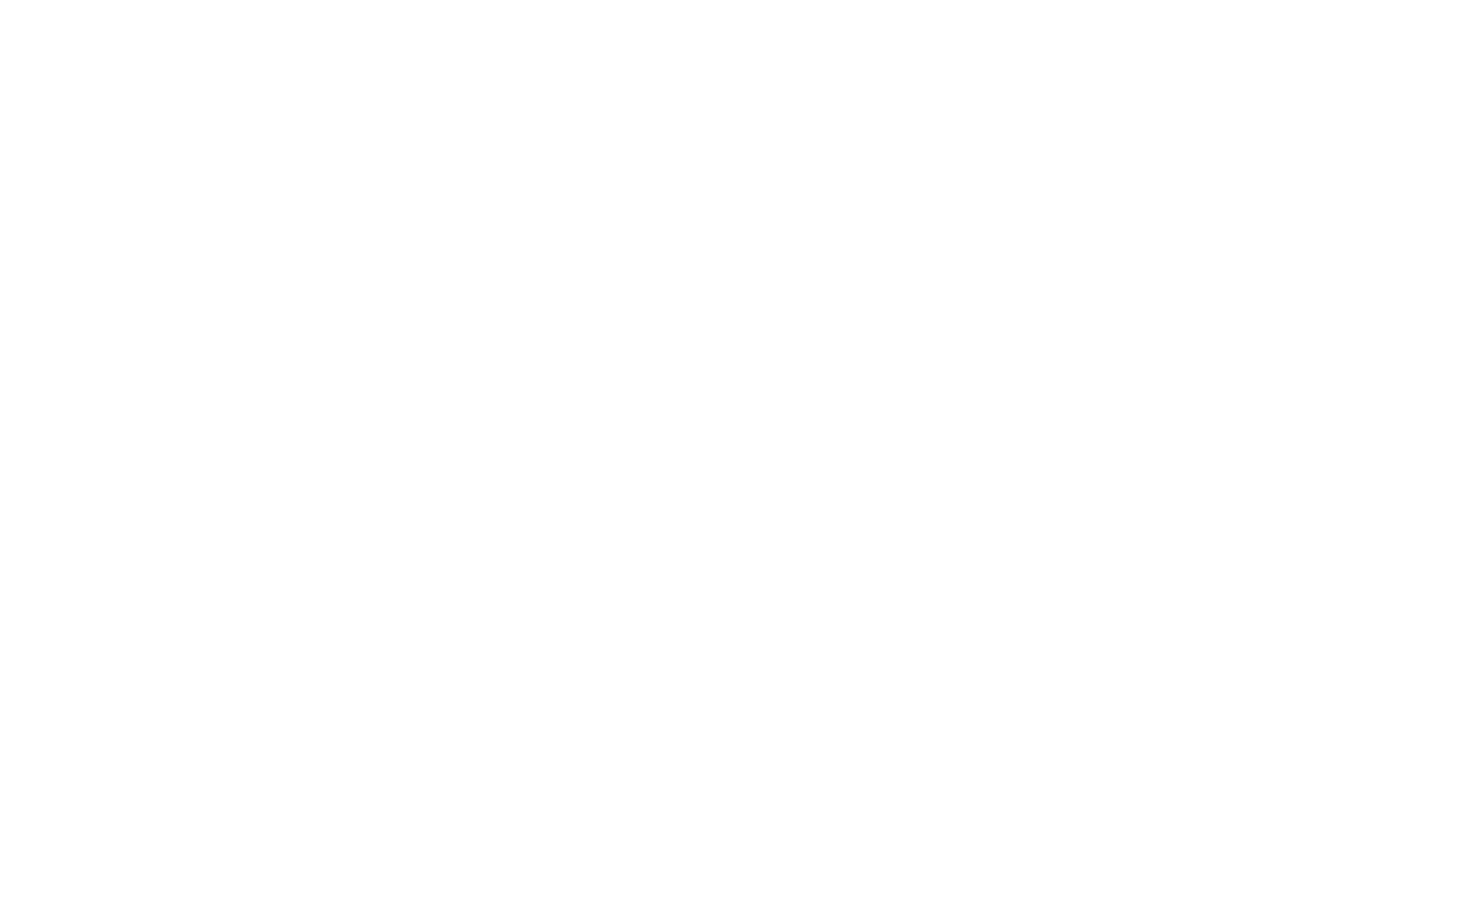 HSI System North America